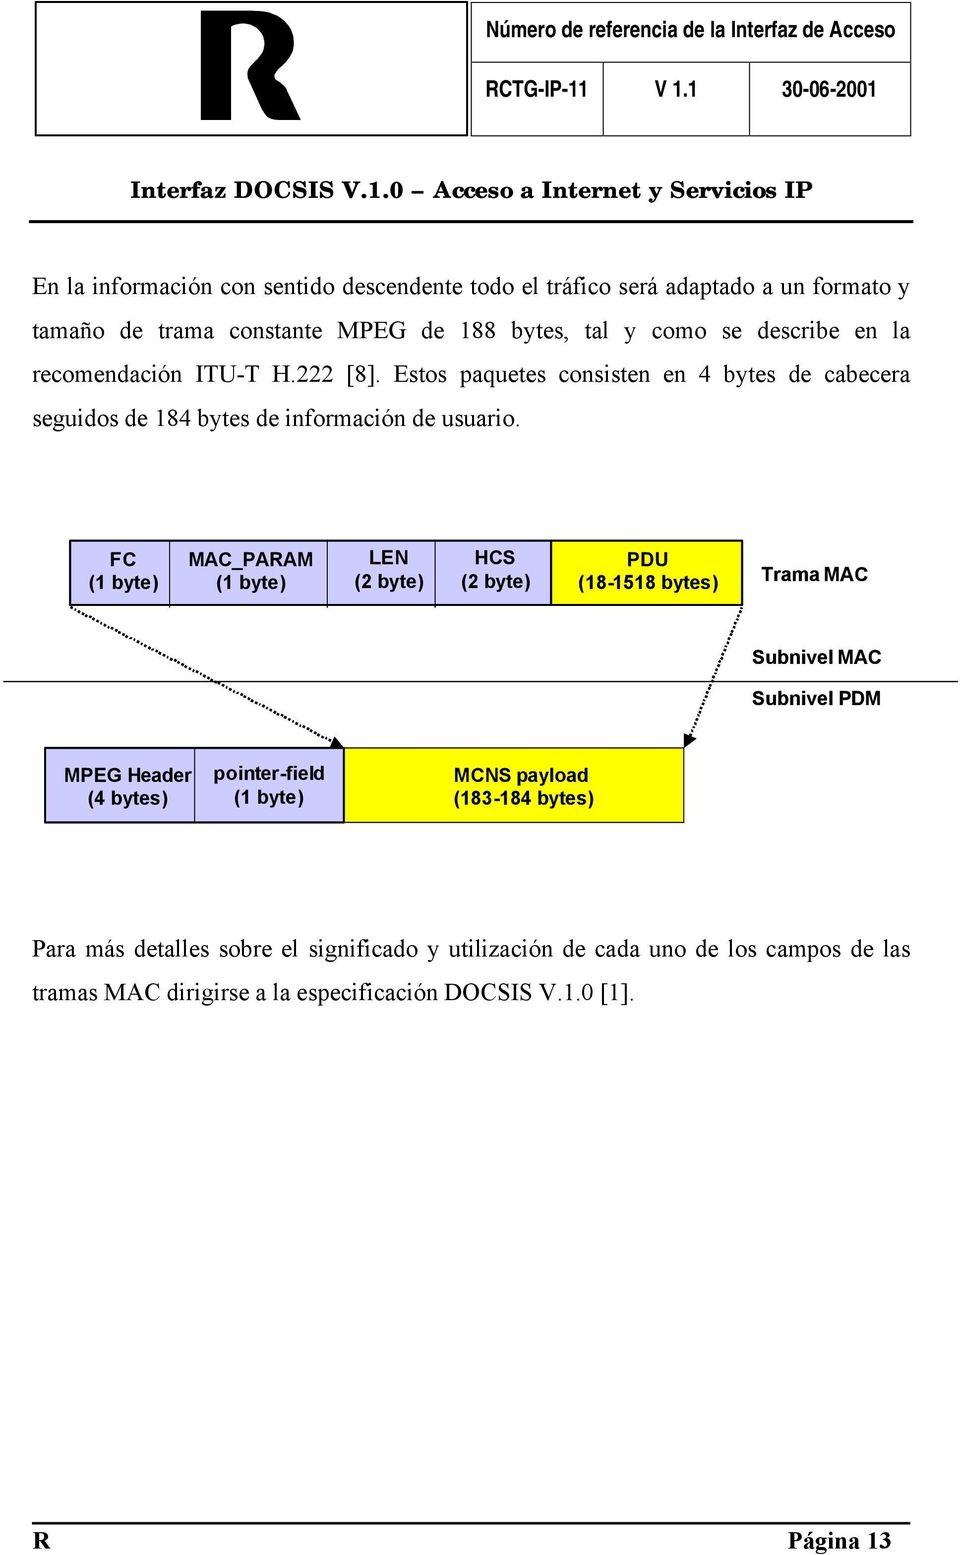 FC (1 byte) MAC_PARAM (1 byte) LEN (2 byte) HCS (2 byte) PDU (18-1518 bytes) Trama MAC Subnivel MAC Subnivel PDM MPEG Header (4 bytes) pointer-field (1 byte)